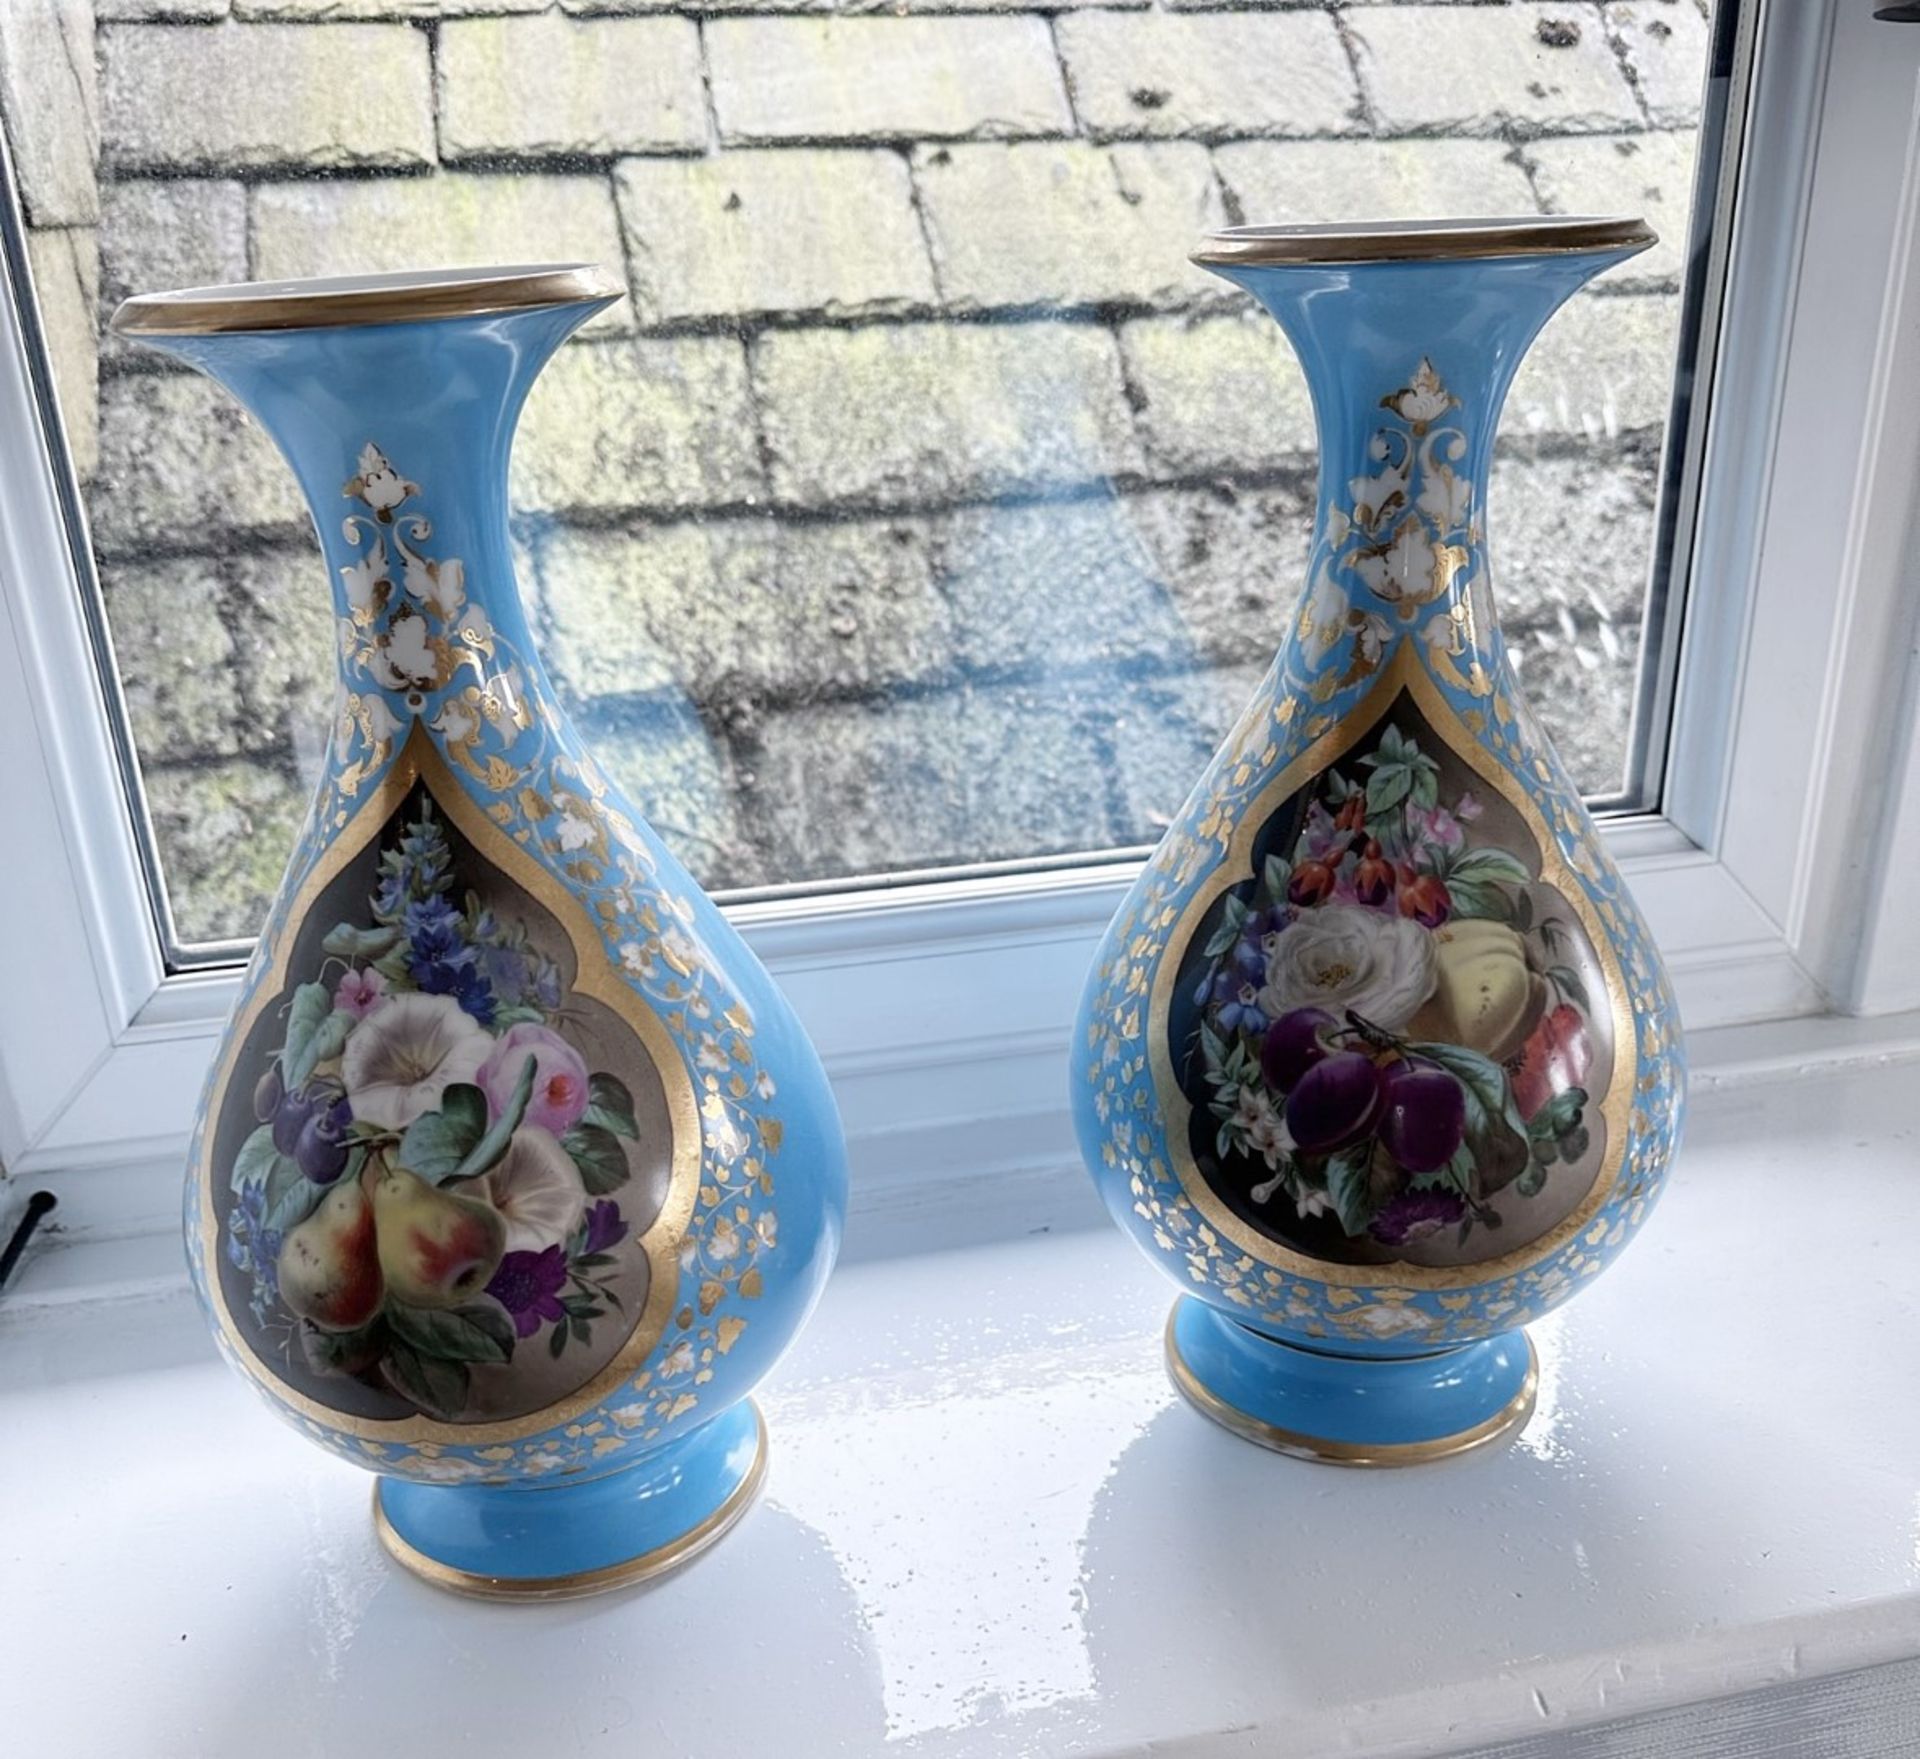 2 x VINTAGE Cloisonne French Fine Bone China Vases With Gold Leaf Design - Image 5 of 12